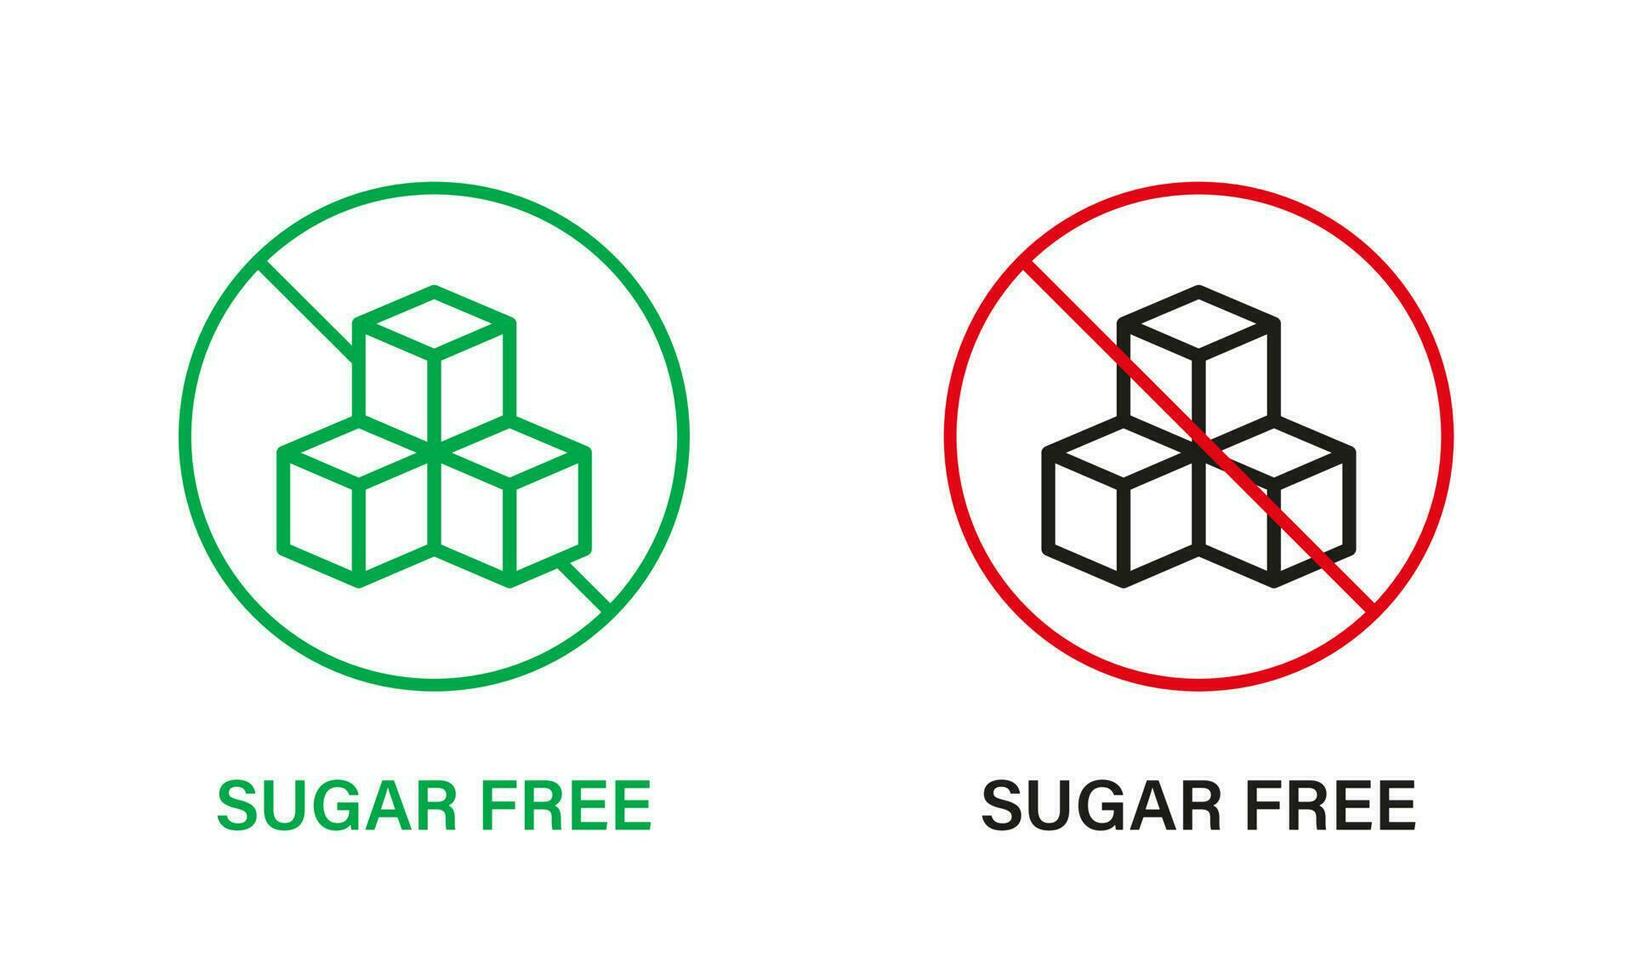 azúcar gratis línea icono colocar. comida No adicional azúcar con detener signo. glucosa prohibido símbolo. cero glucosa garantizar logo. No azúcar para diabético producto etiqueta. aislado vector ilustración.